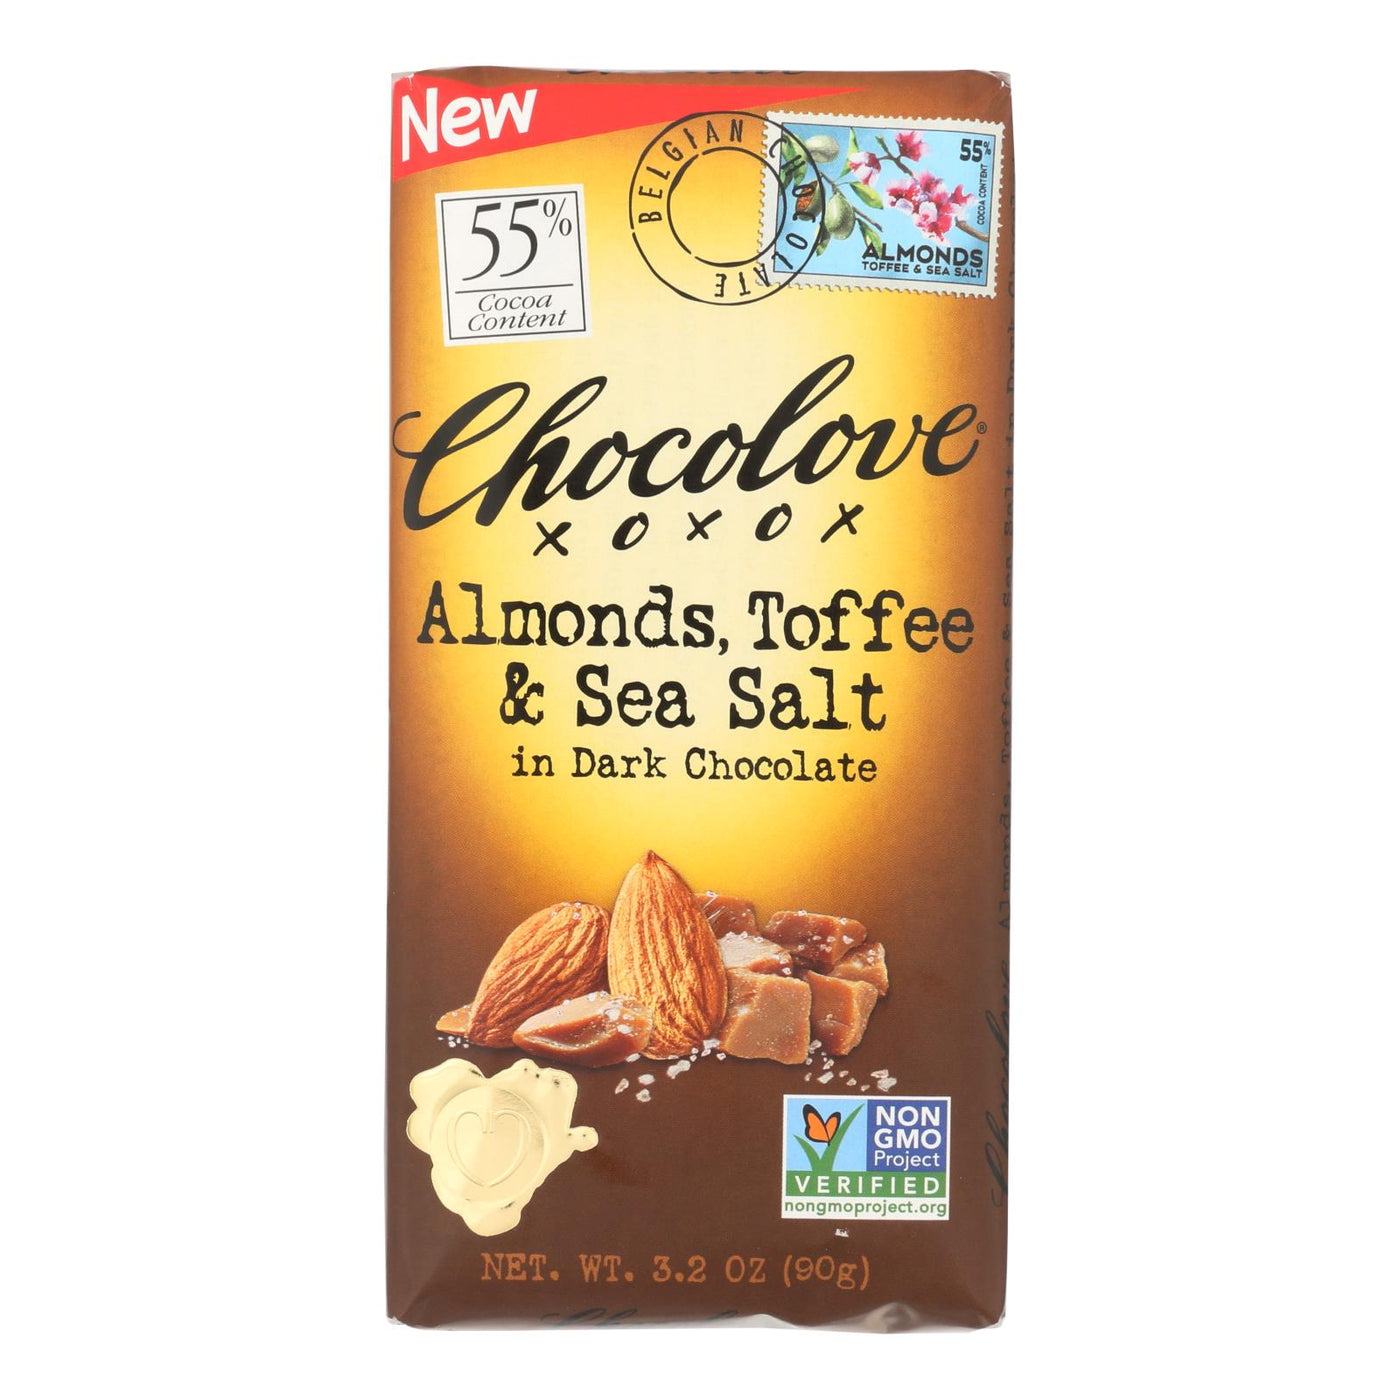 Chocolove Xoxox - Bar - Almond - Toffe - Sea Salt - Dark Chocolate - Case Of 12 - 3.2 Oz | OnlyNaturals.us